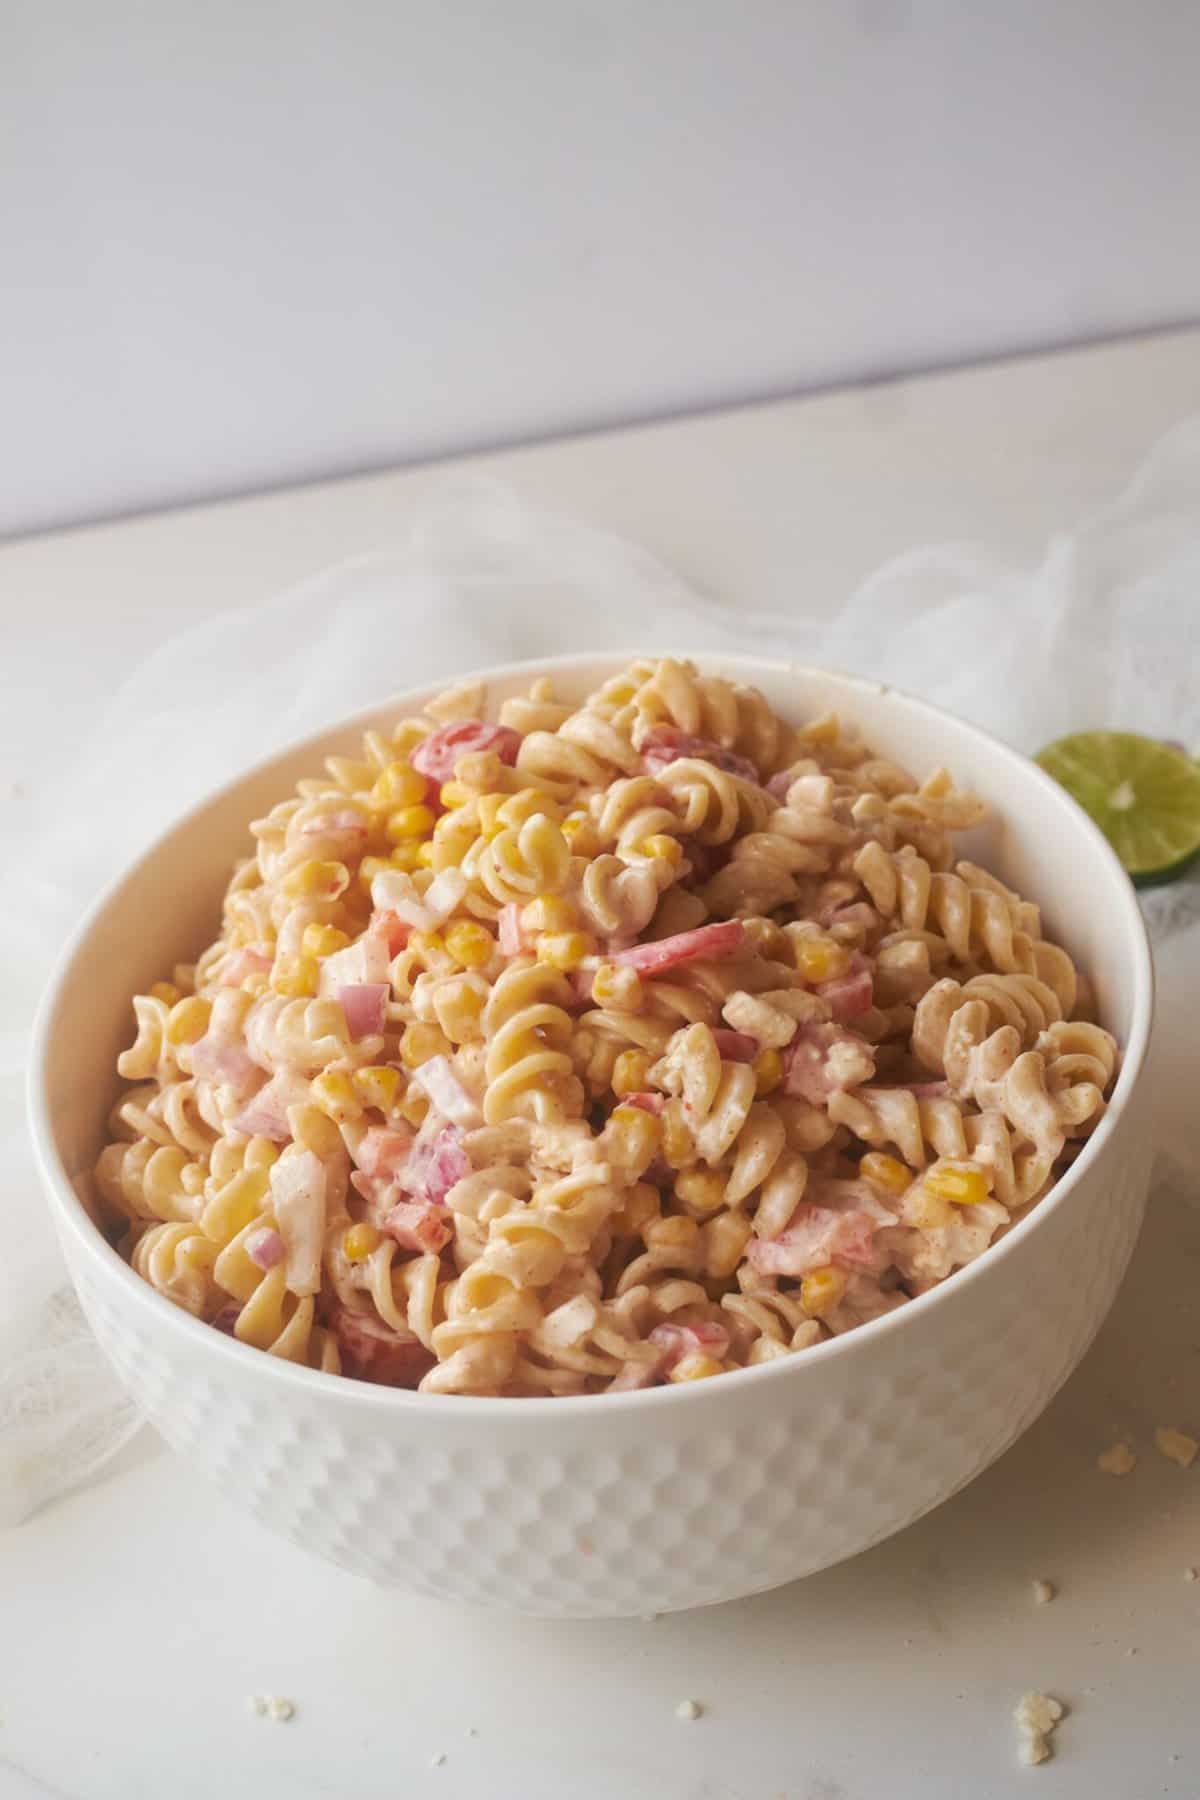 zesty corn pasta salad in white bowl